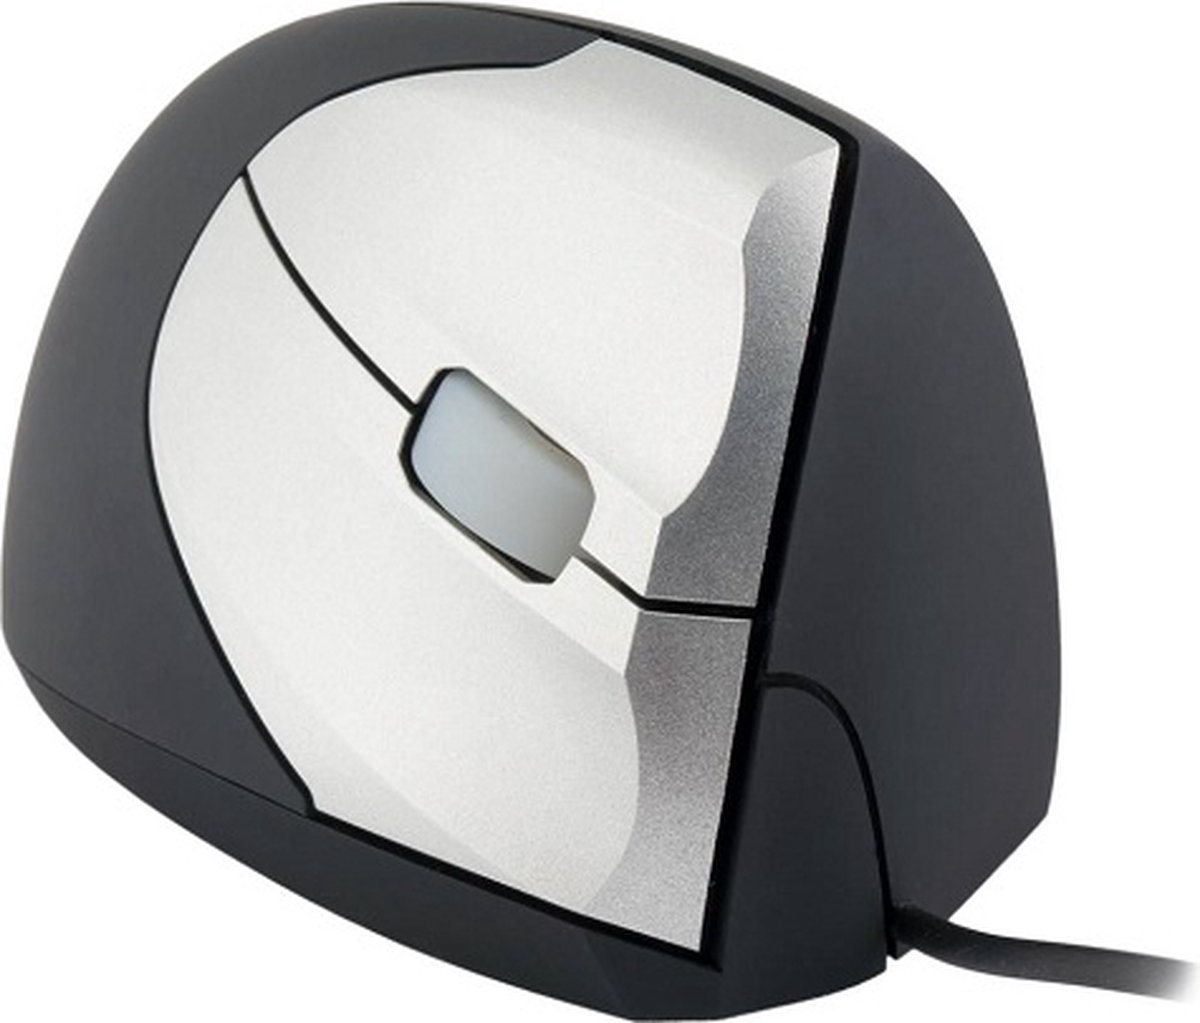 R-GO Tools BakkerElkhuizen SRM Evolution Mouse R